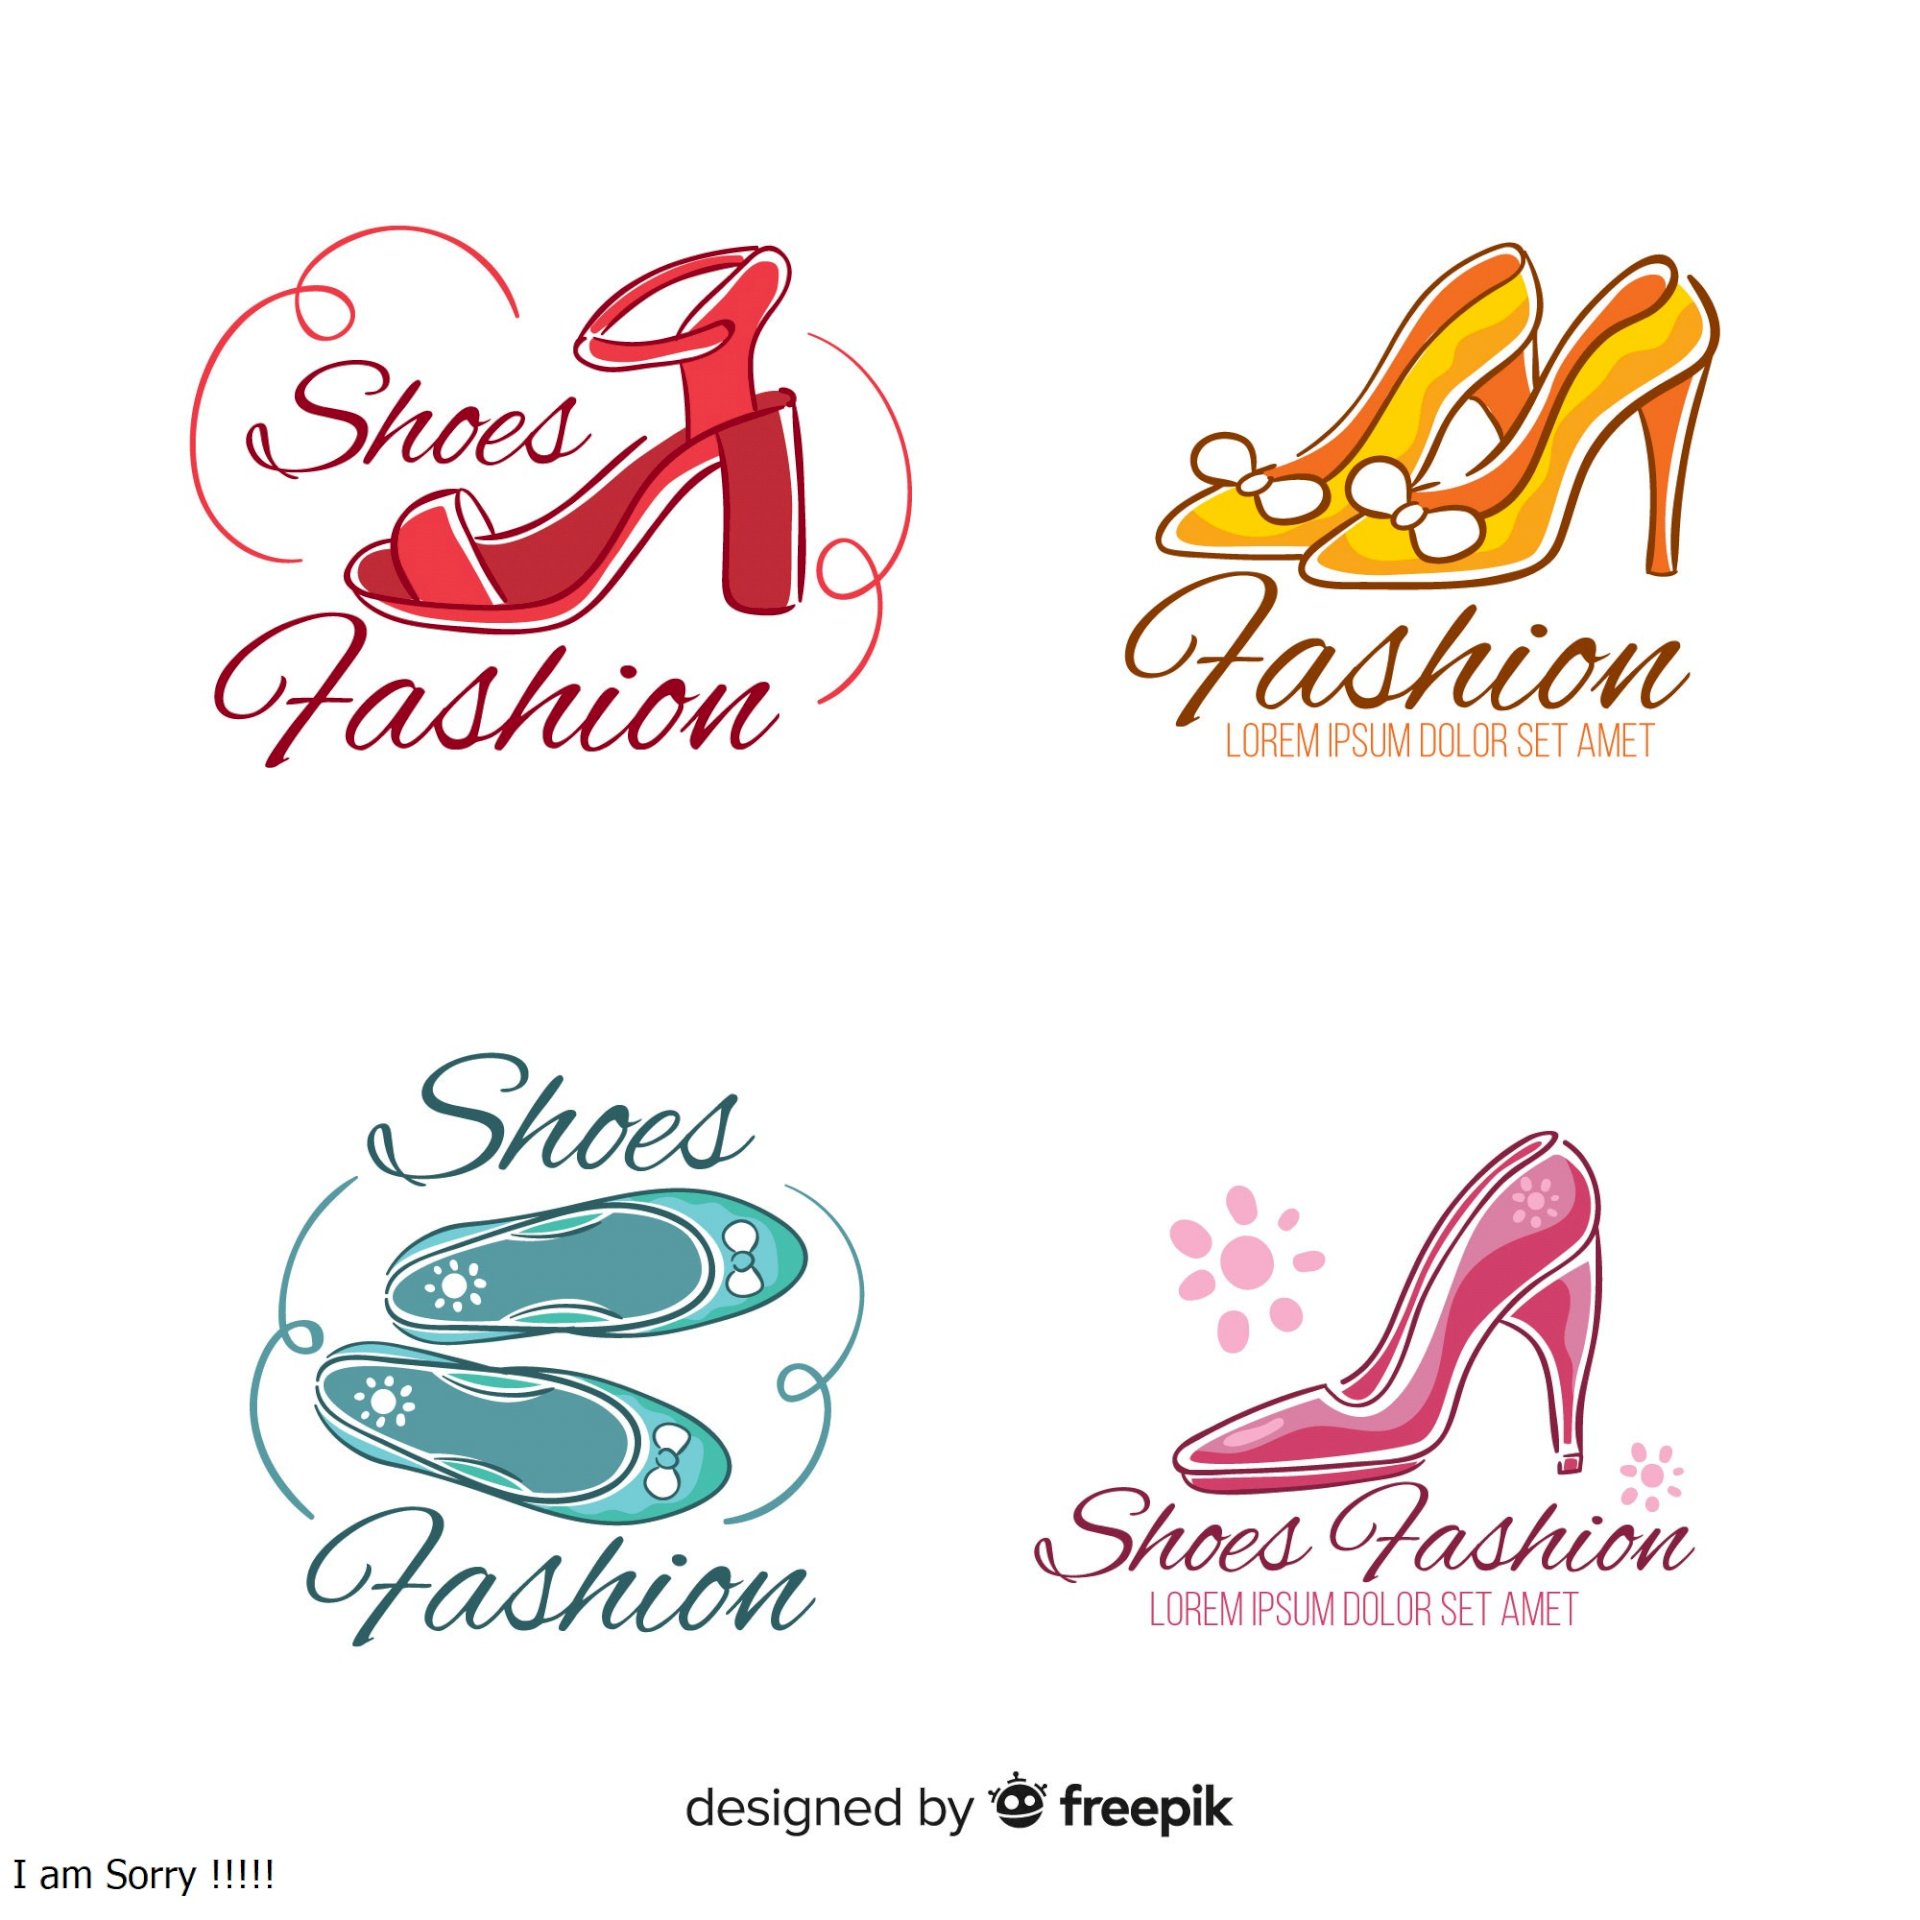 Tải mẫu logo shop giày file vector AI, EPS, JPEG, PNG